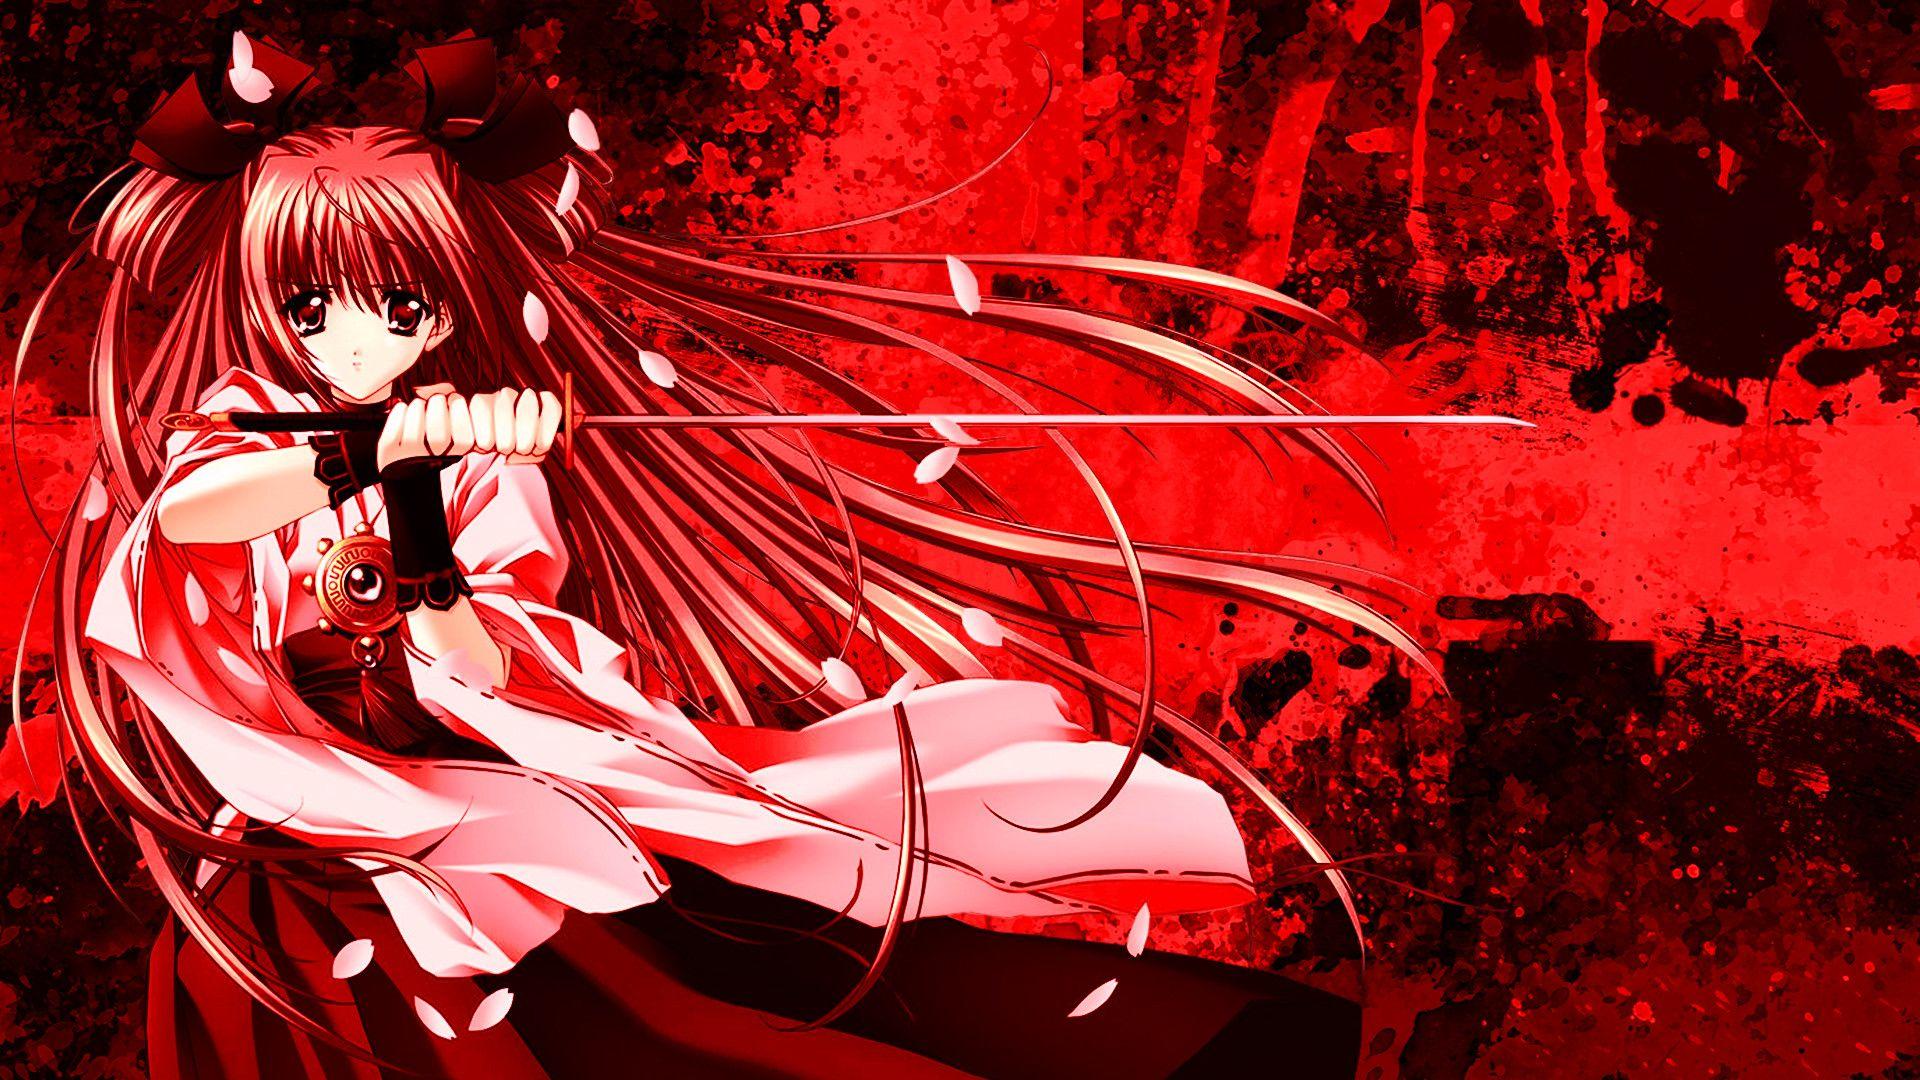 Red Eyes Hair Anime Girl With Black Dress 4K HD Anime Girl Wallpapers  HD  Wallpapers  ID 95468